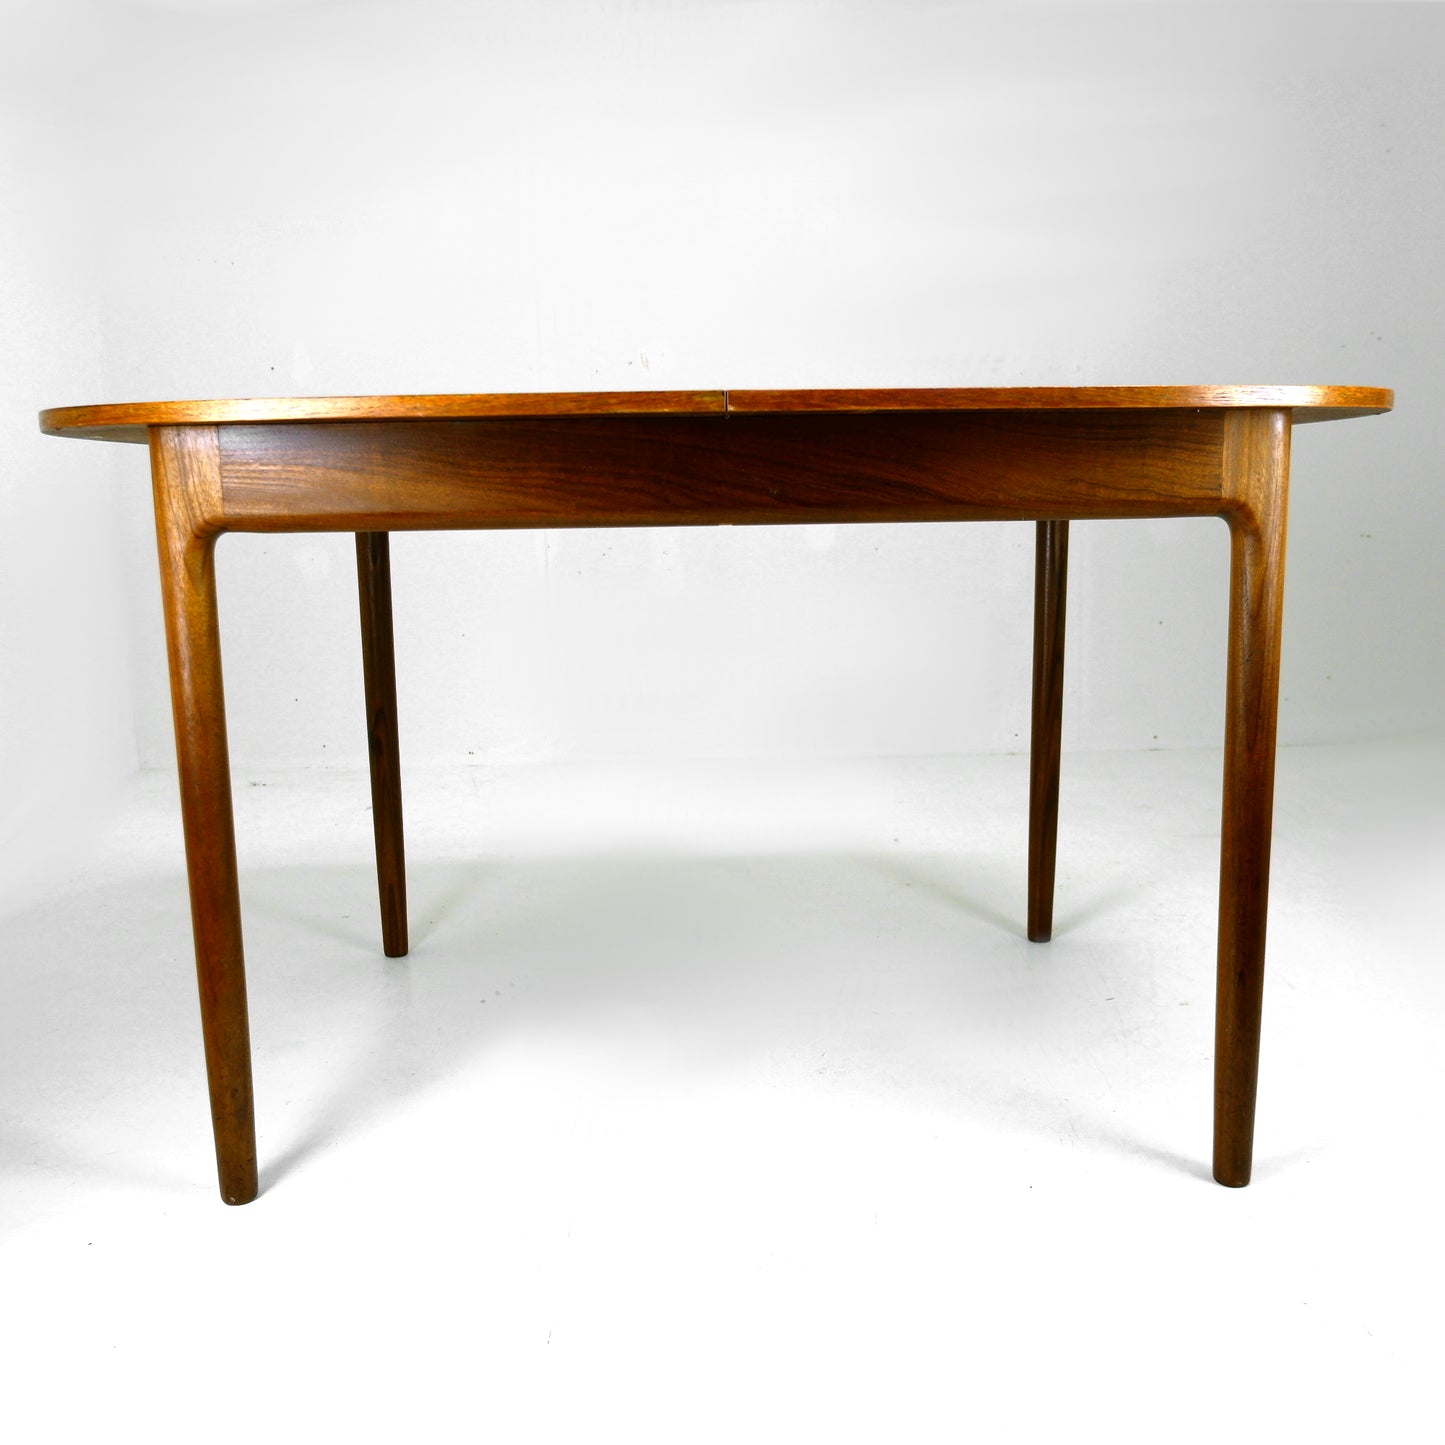 Vintage G PLAN Teak Dining Table - Danish Range by Kfod Larsen - Mid Century Modern